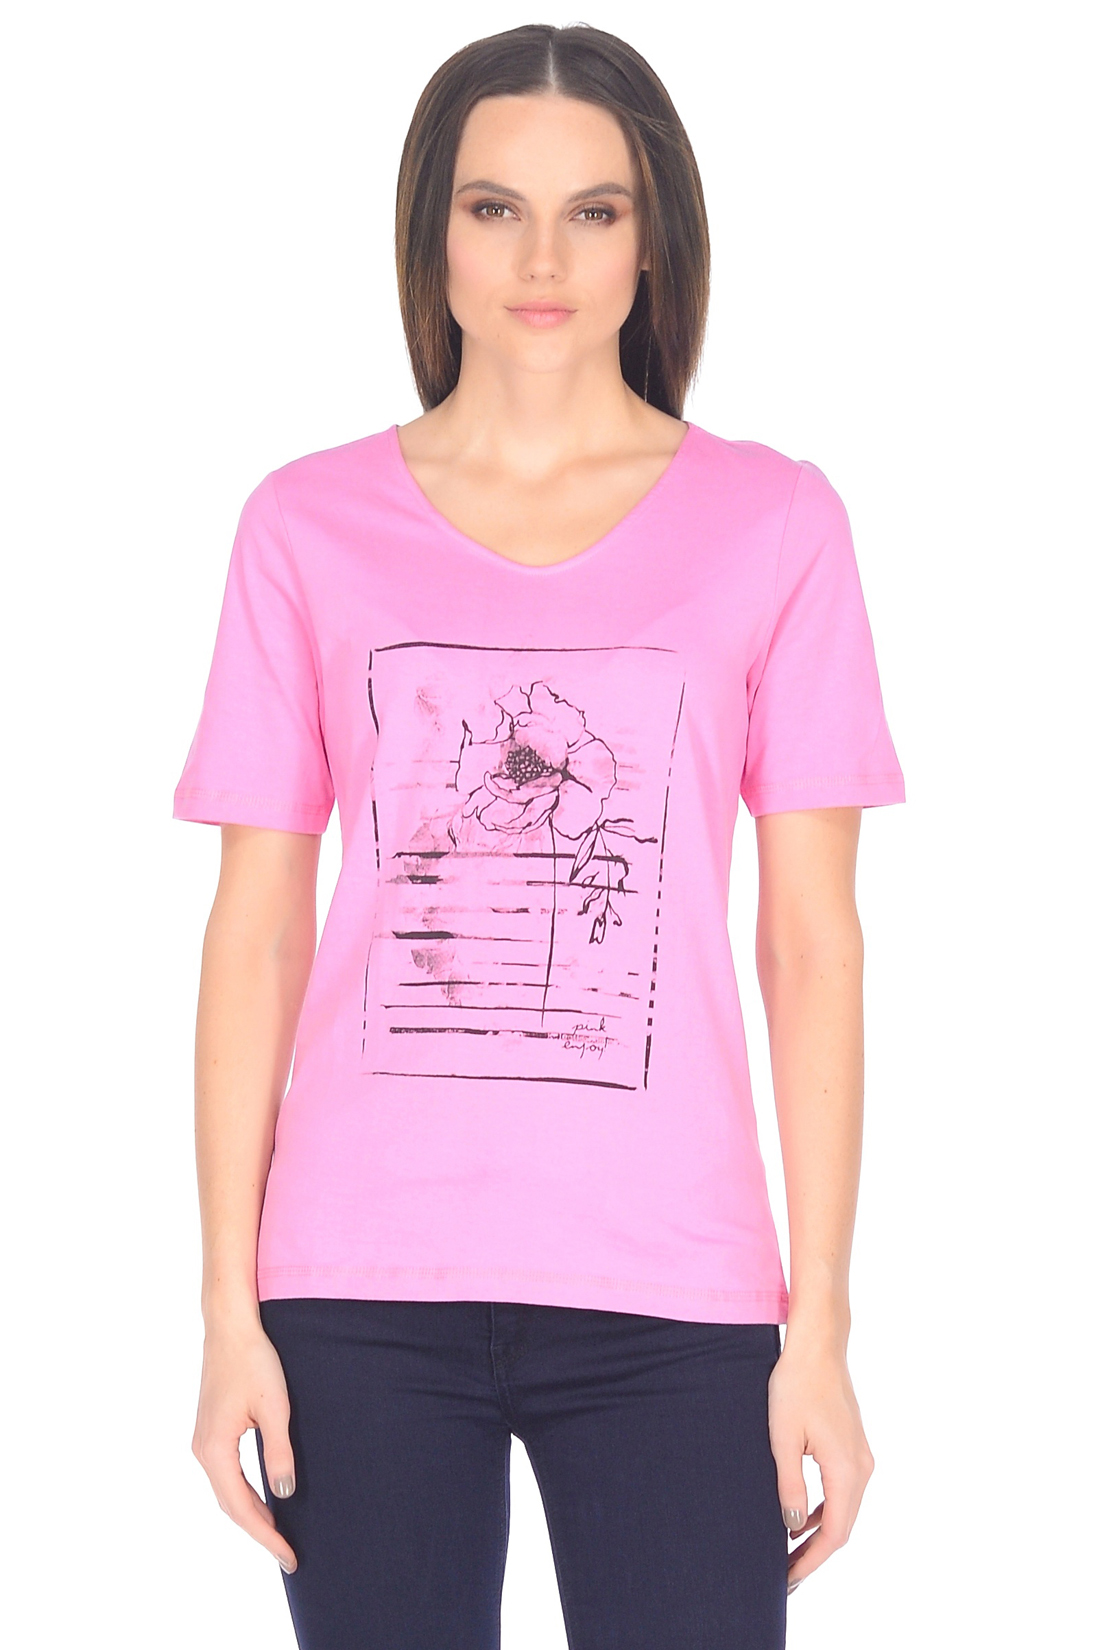 Розовая футболка с принтом (арт. baon B238069), размер S, цвет розовый Розовая футболка с принтом (арт. baon B238069) - фото 1